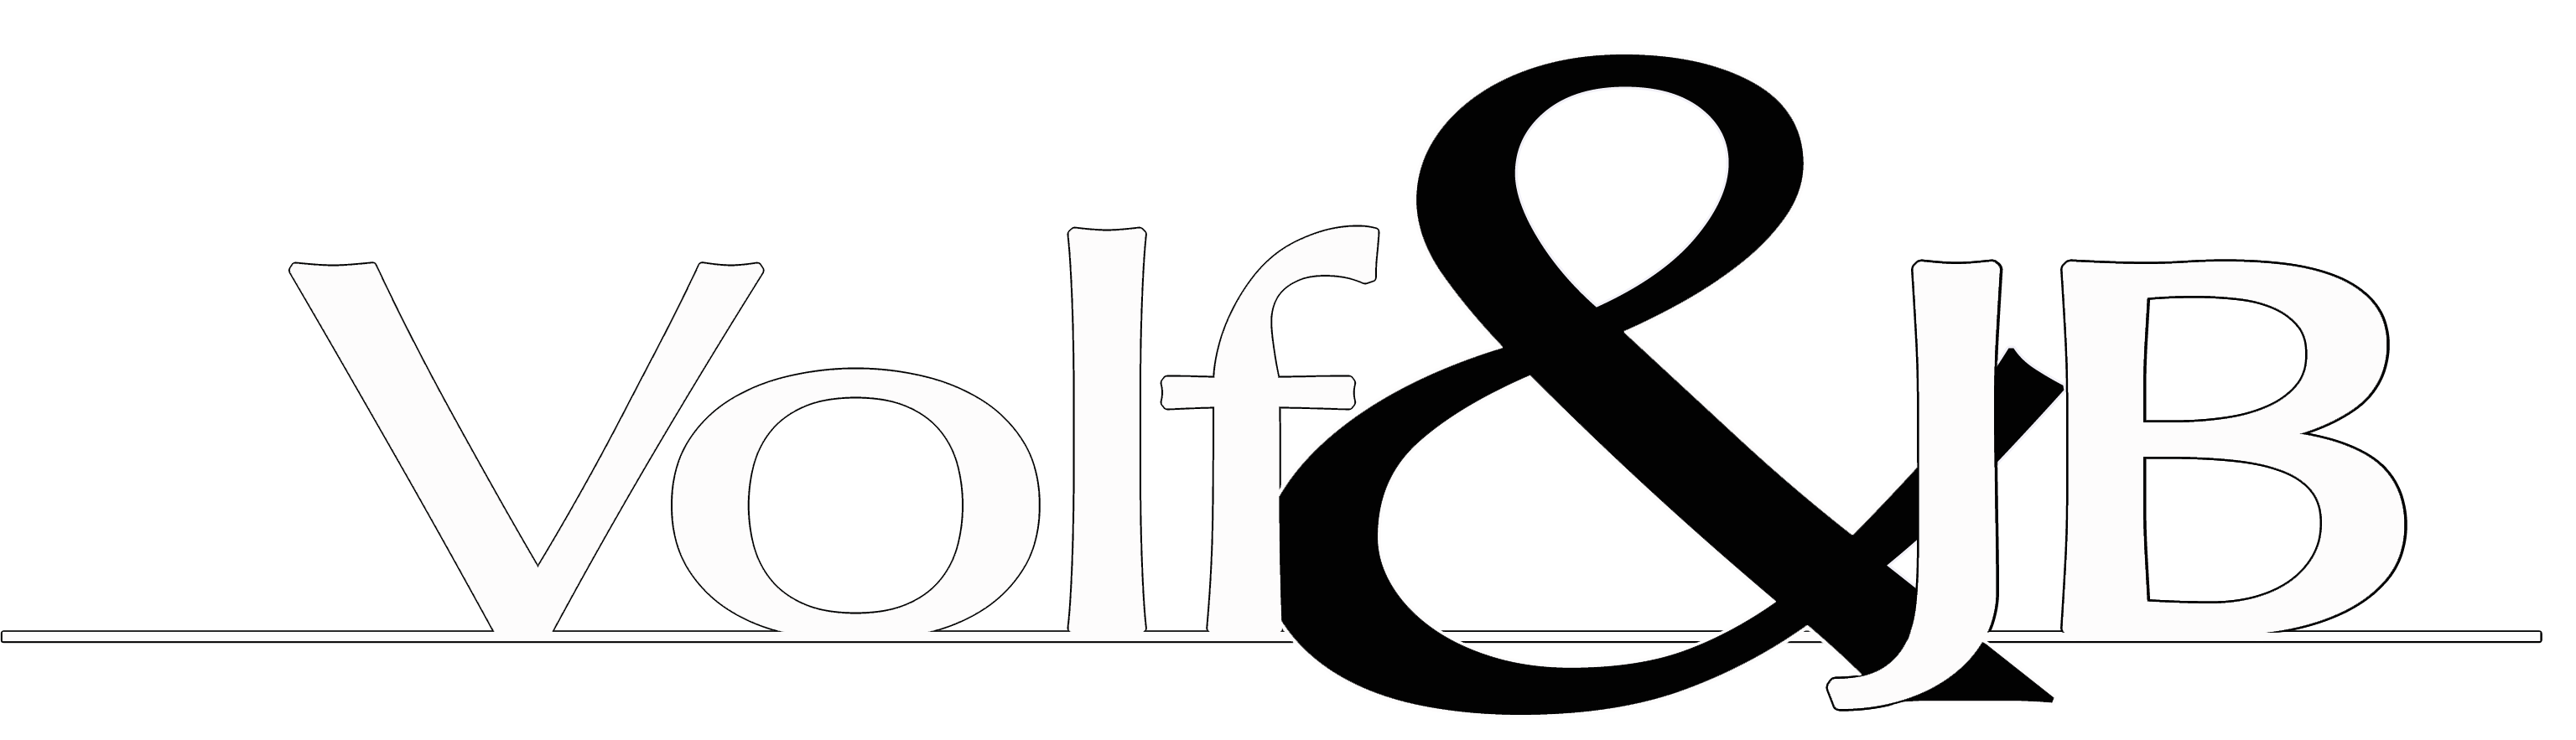 Volf &#38; JB ENDELIG logo copy